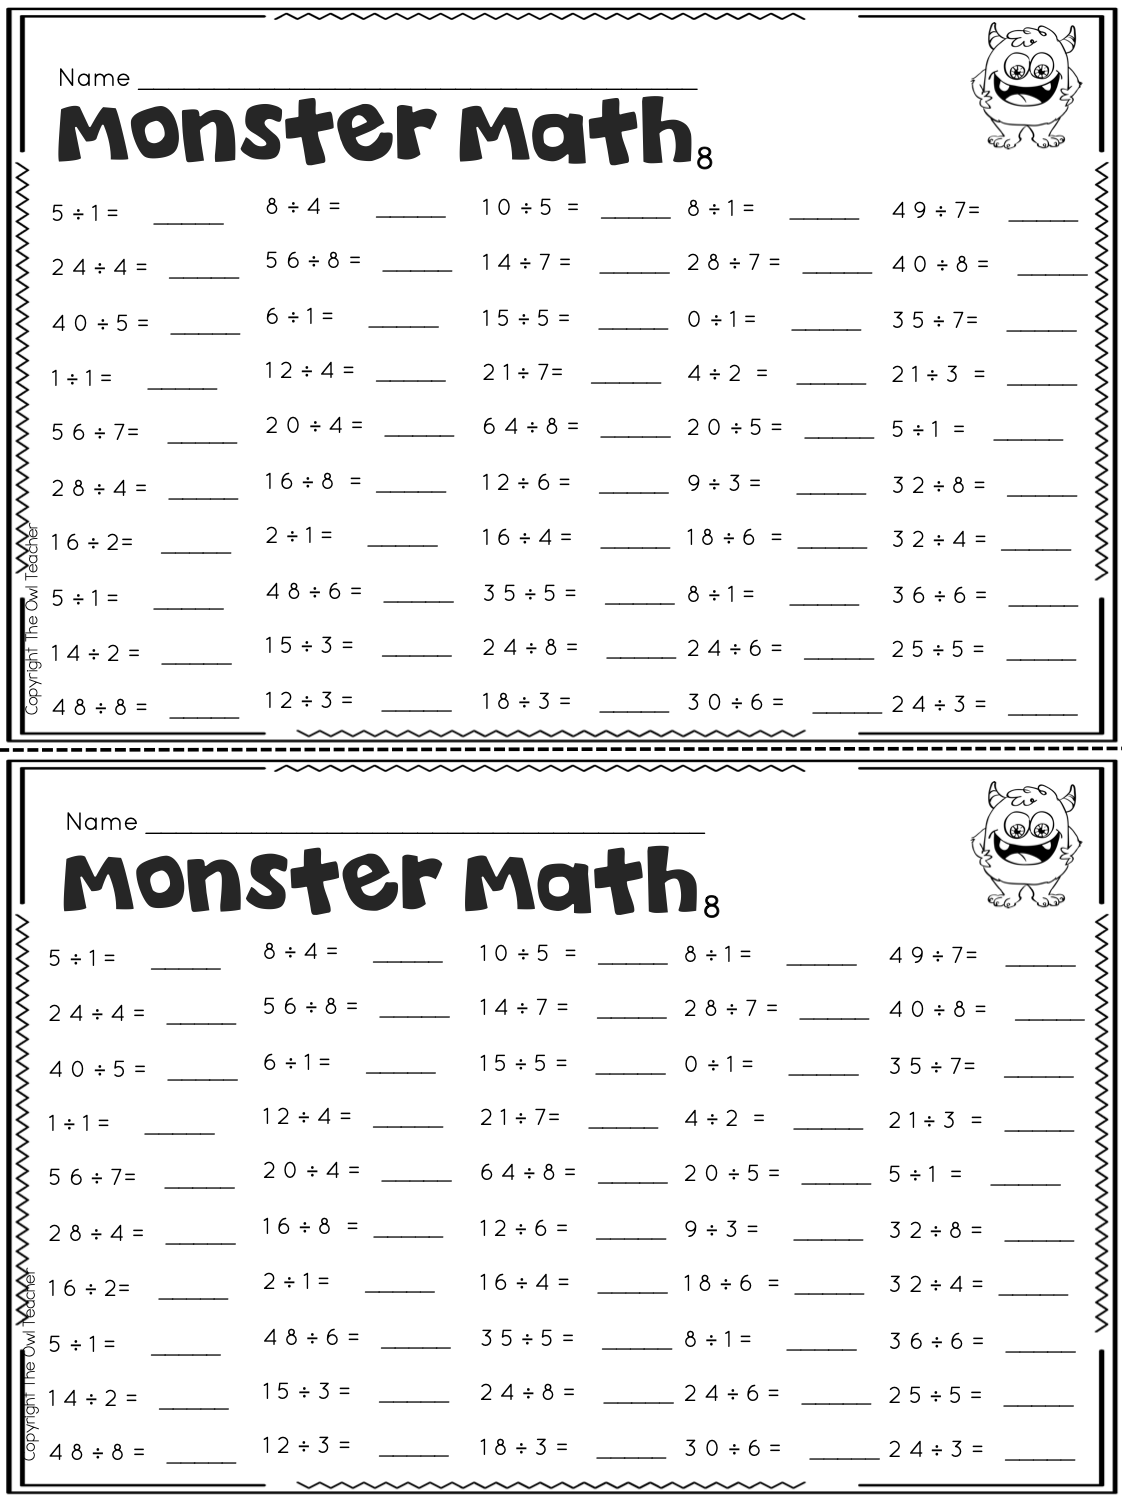 3 S Multiplication Fluency Worksheets